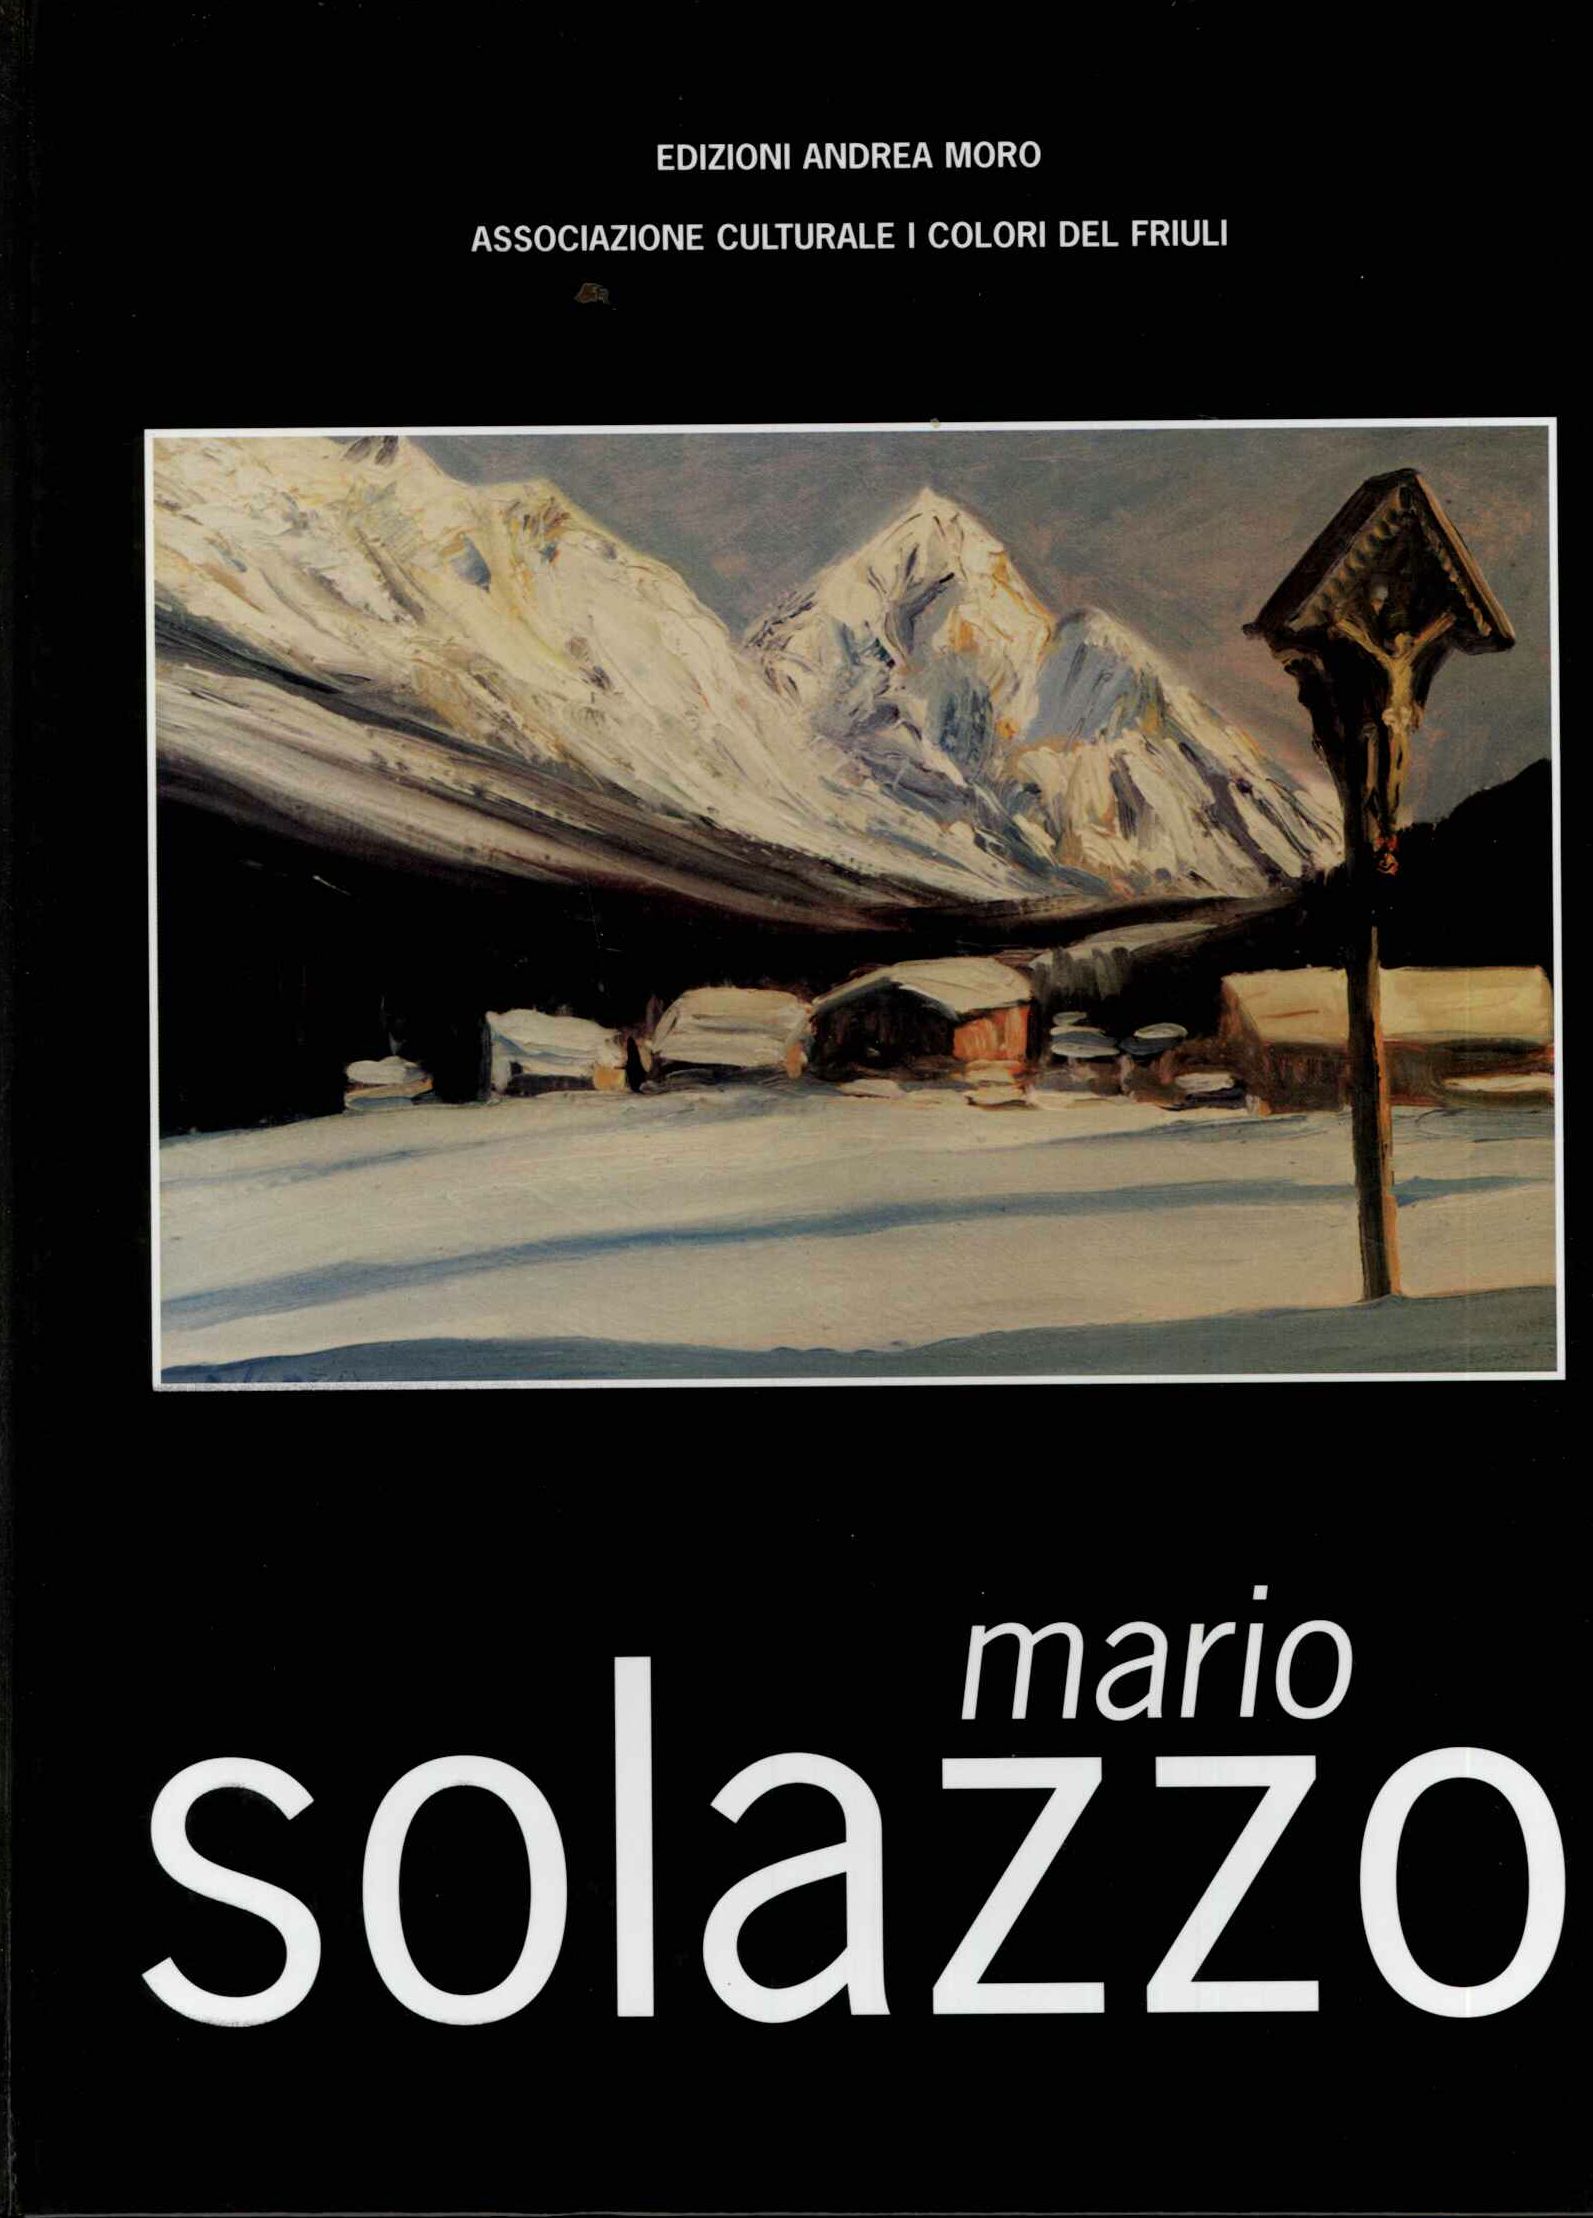 Mario Solazzo